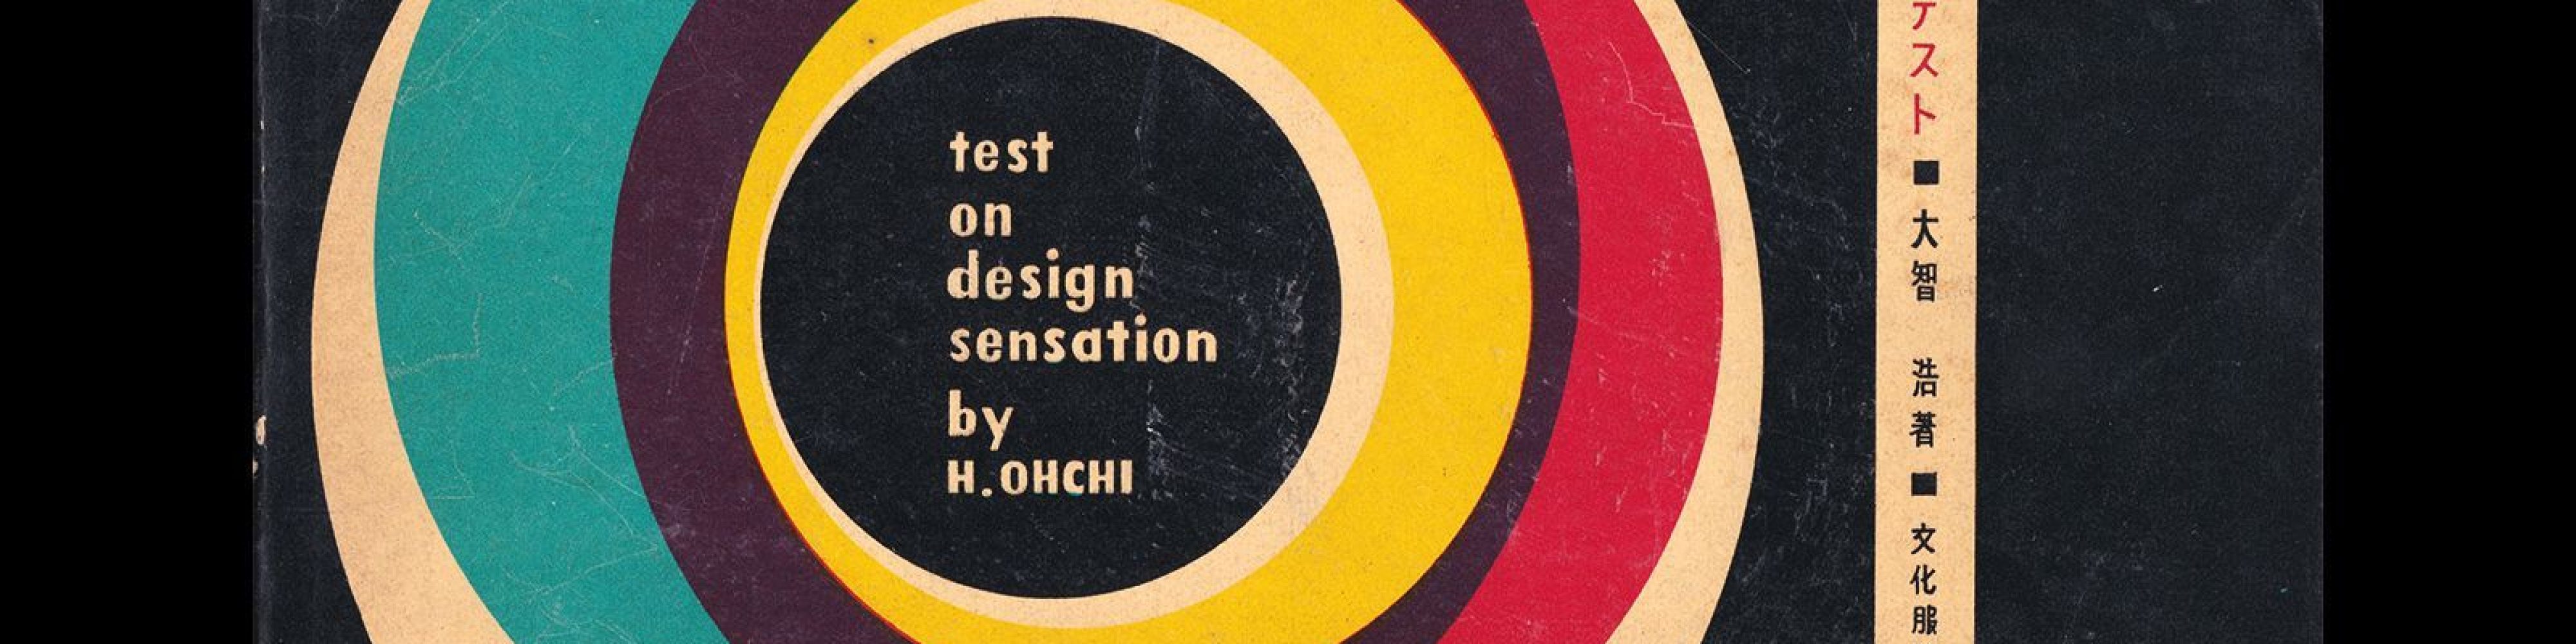 Test on Design Sensation, Hiroshi Ohchi, 1955. Designed by Hiroshi Ohchi